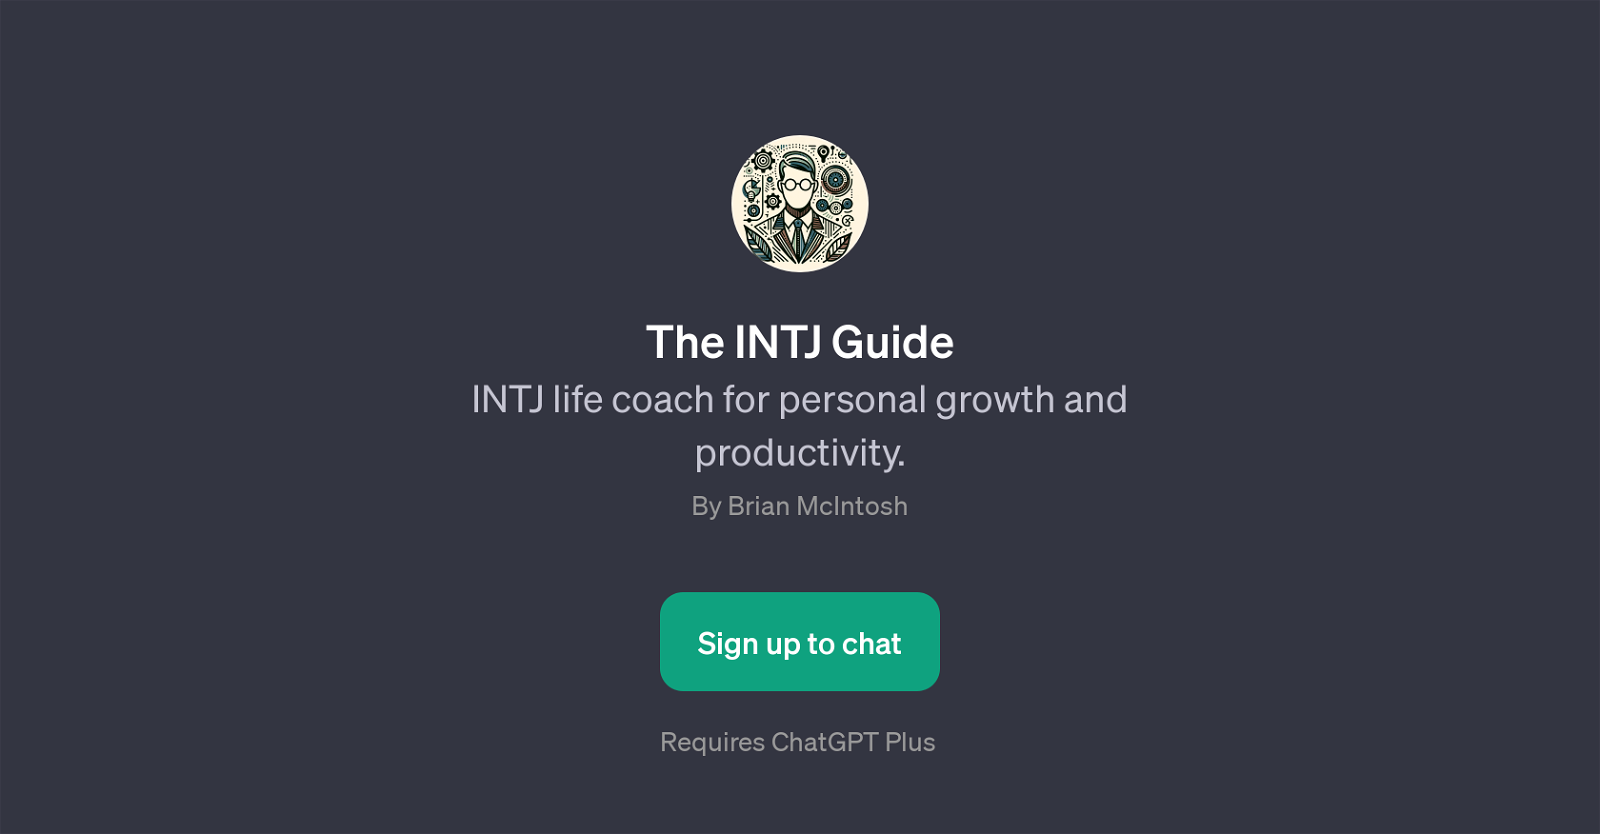 The INTJ Guide website